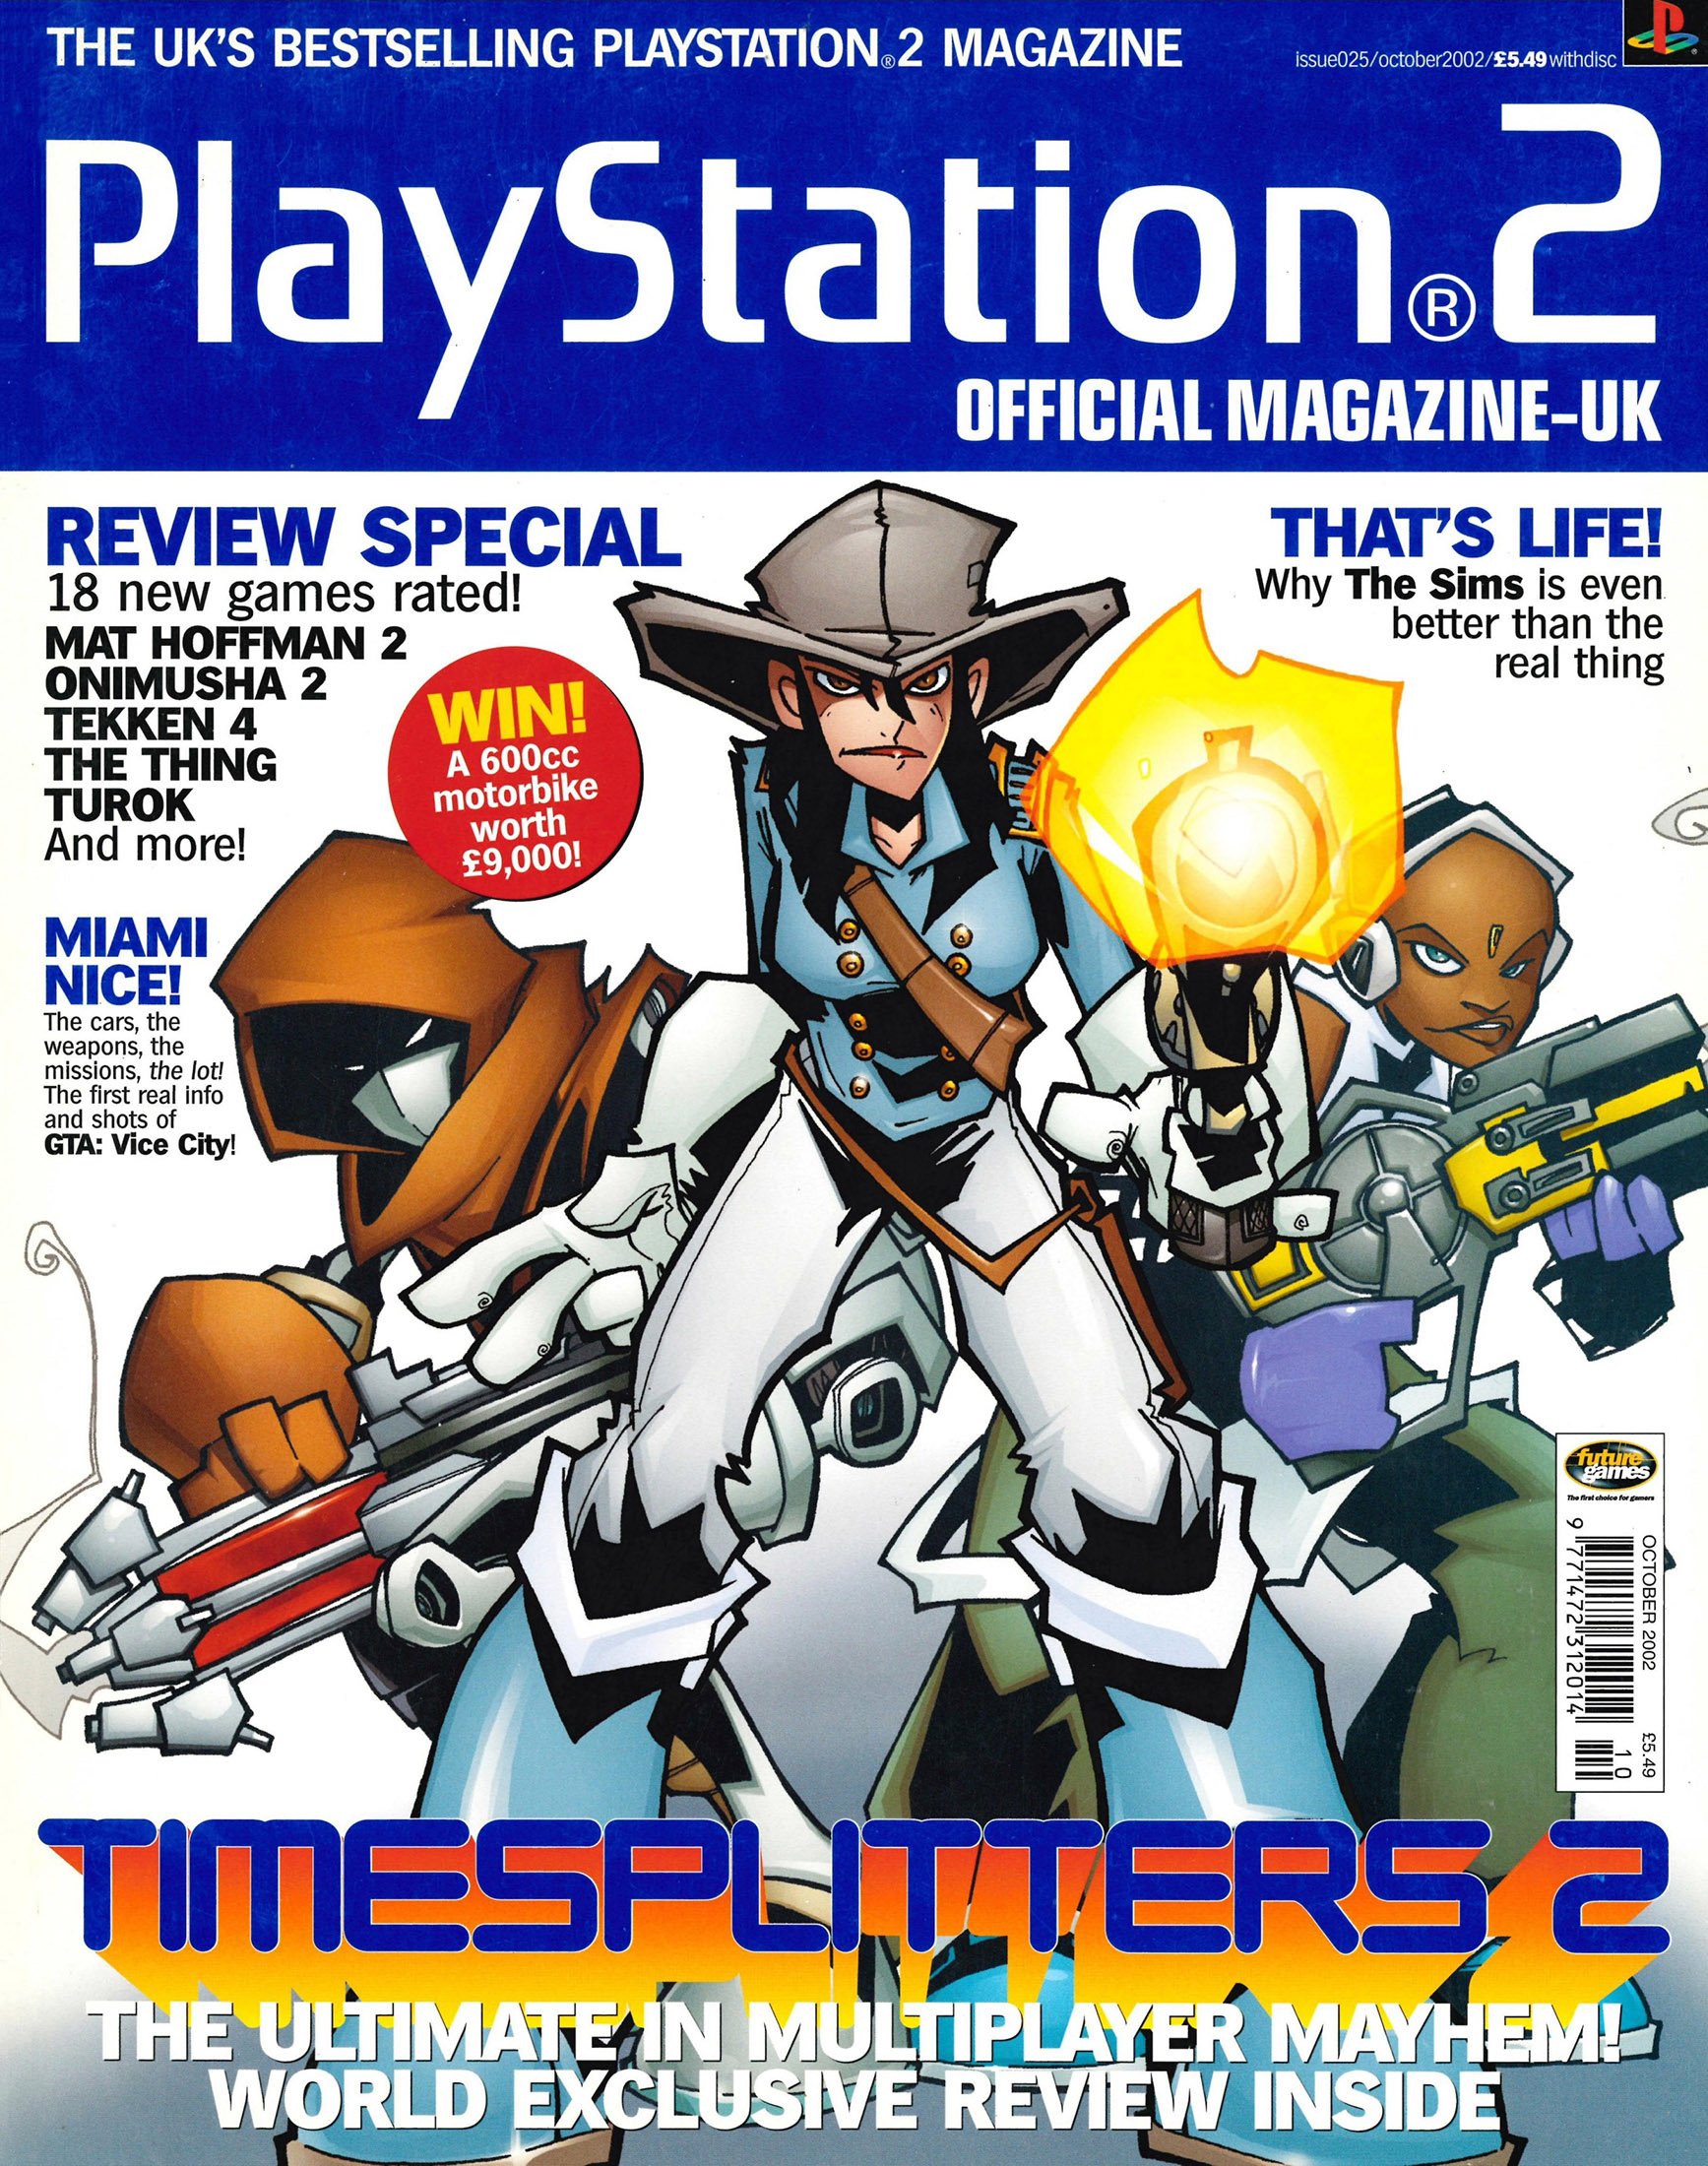 Magazine 2. Журнал PLAYSTATION 2. Пиратские журналы PLAYSTATION 2. Журнал PLAYSTATION 2004. Журнал PLAYSTATION 2 2006 года.